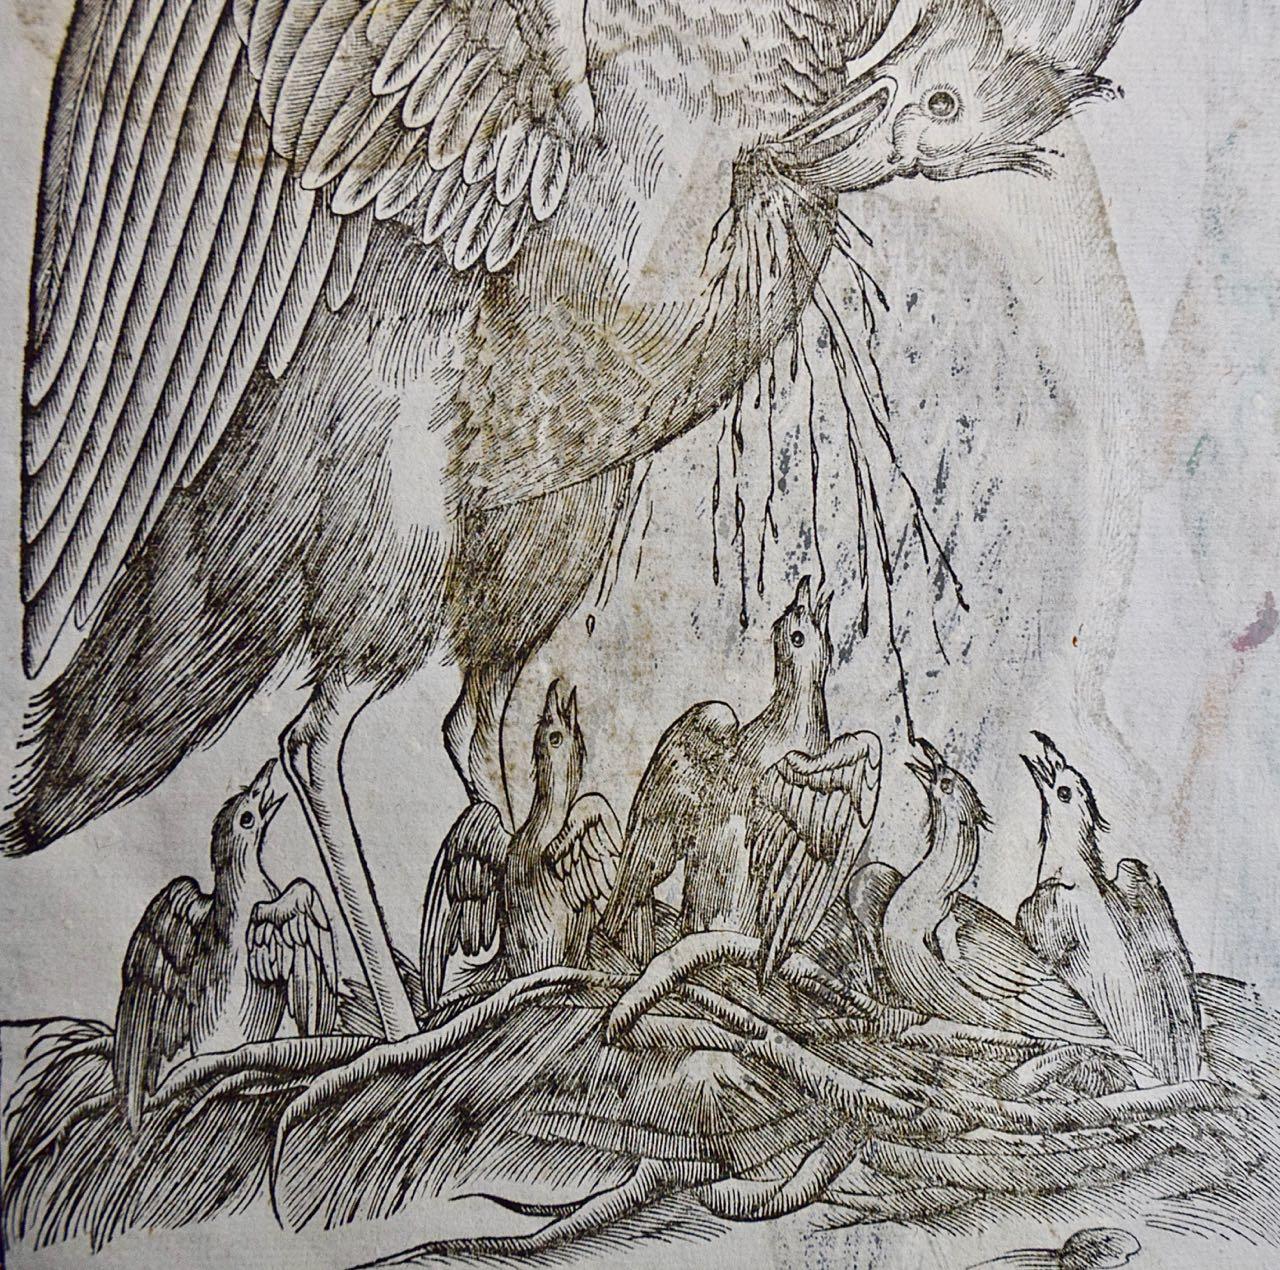  Pelican Bird: A 16th/17th Century Hand-colored Engraving by Aldrovandi - Gray Landscape Print by Ulisse Aldrovandi